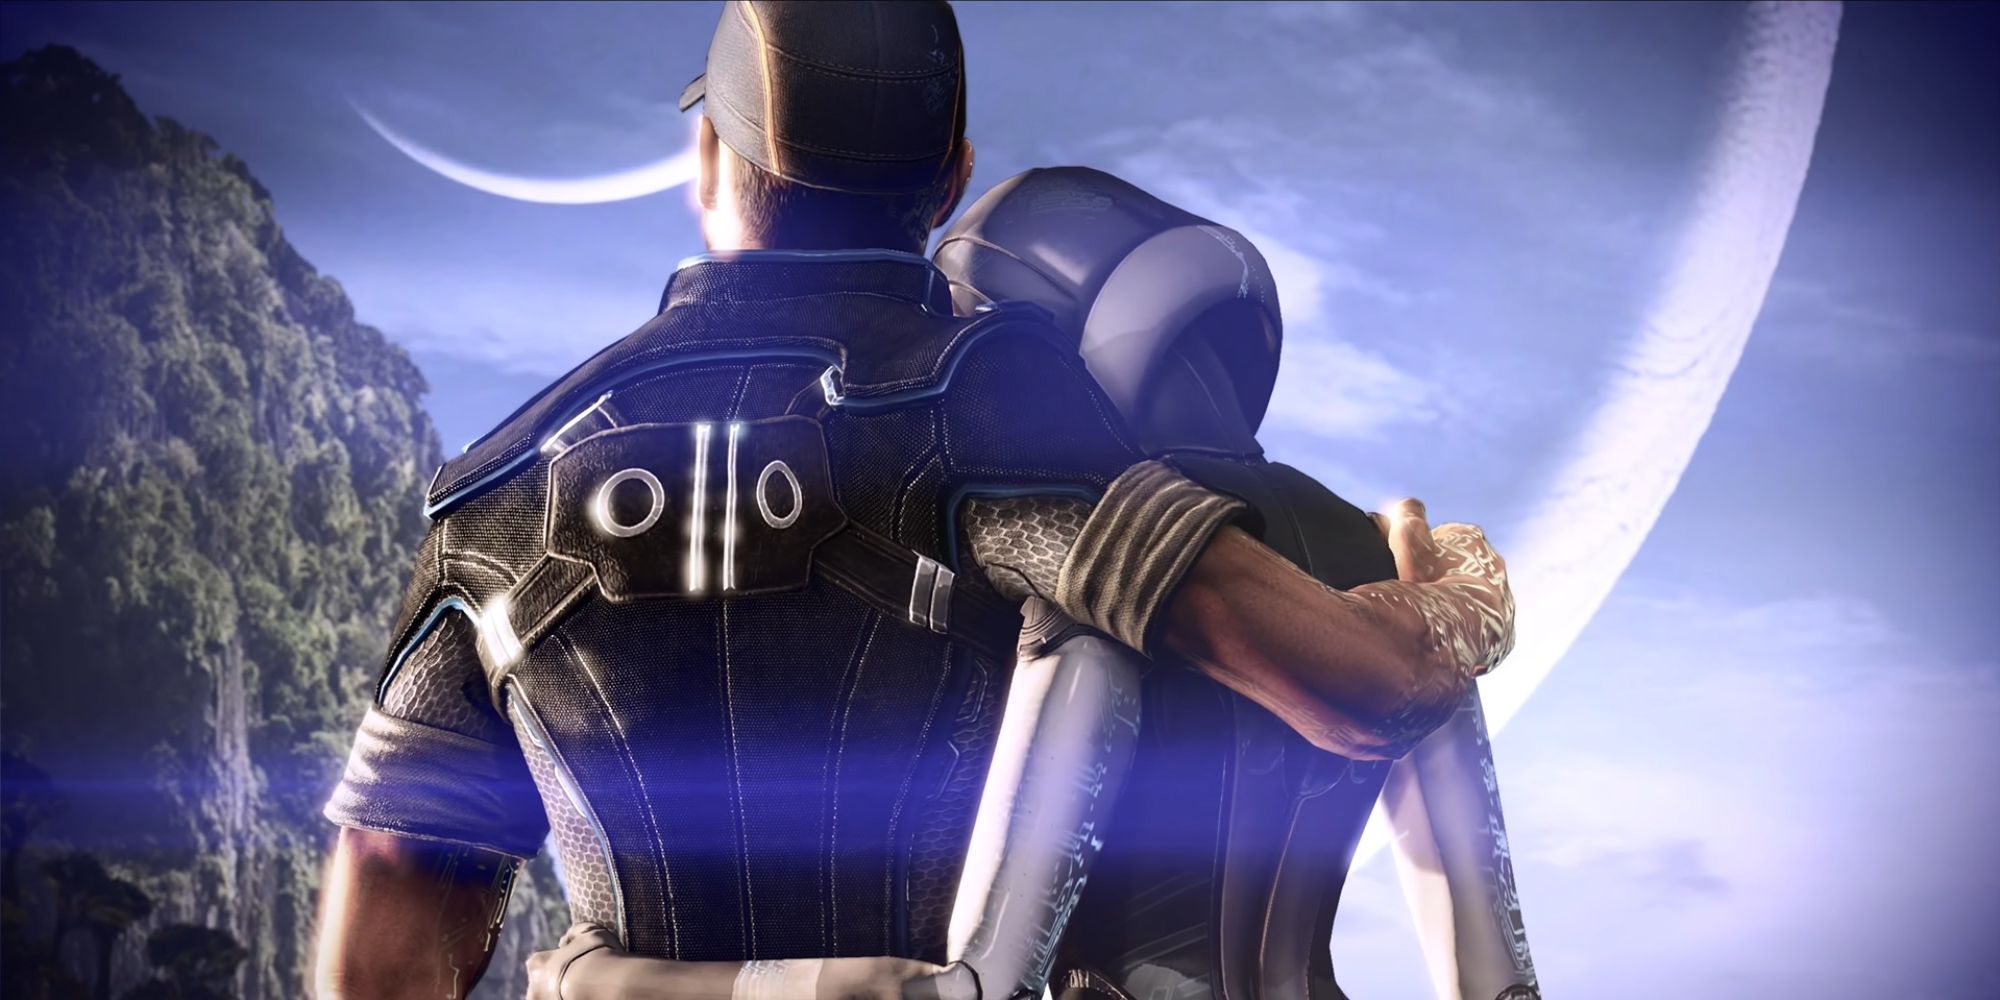 Mass Effect 3 ජෝකර් සහ එඩි වැලඳ ගැනීම